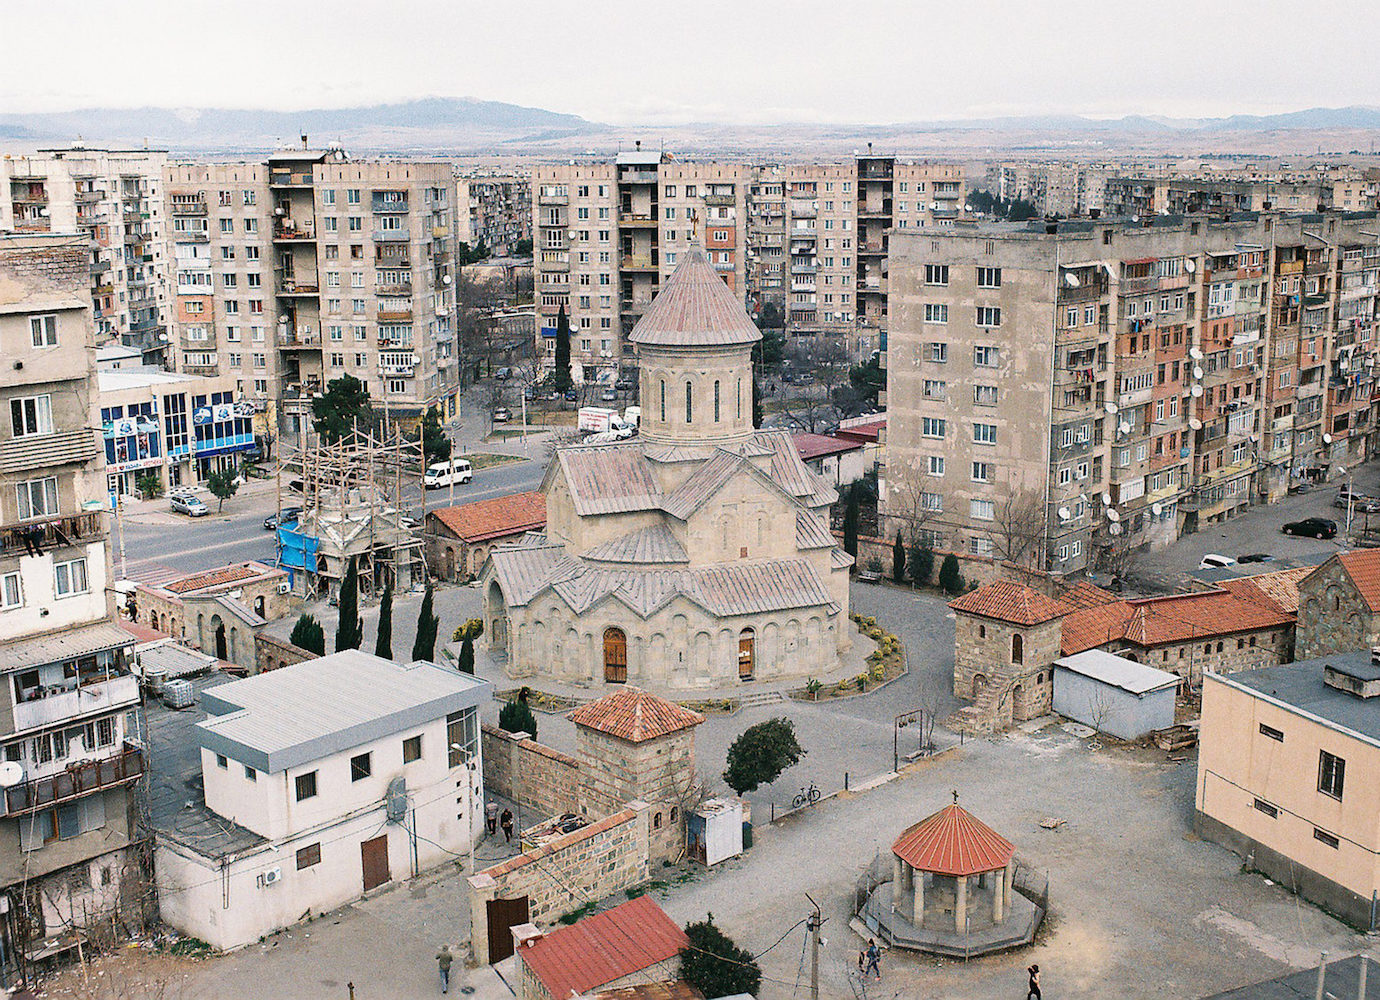 See the award-winning photos celebrating Eastern Europe’s mass housing 